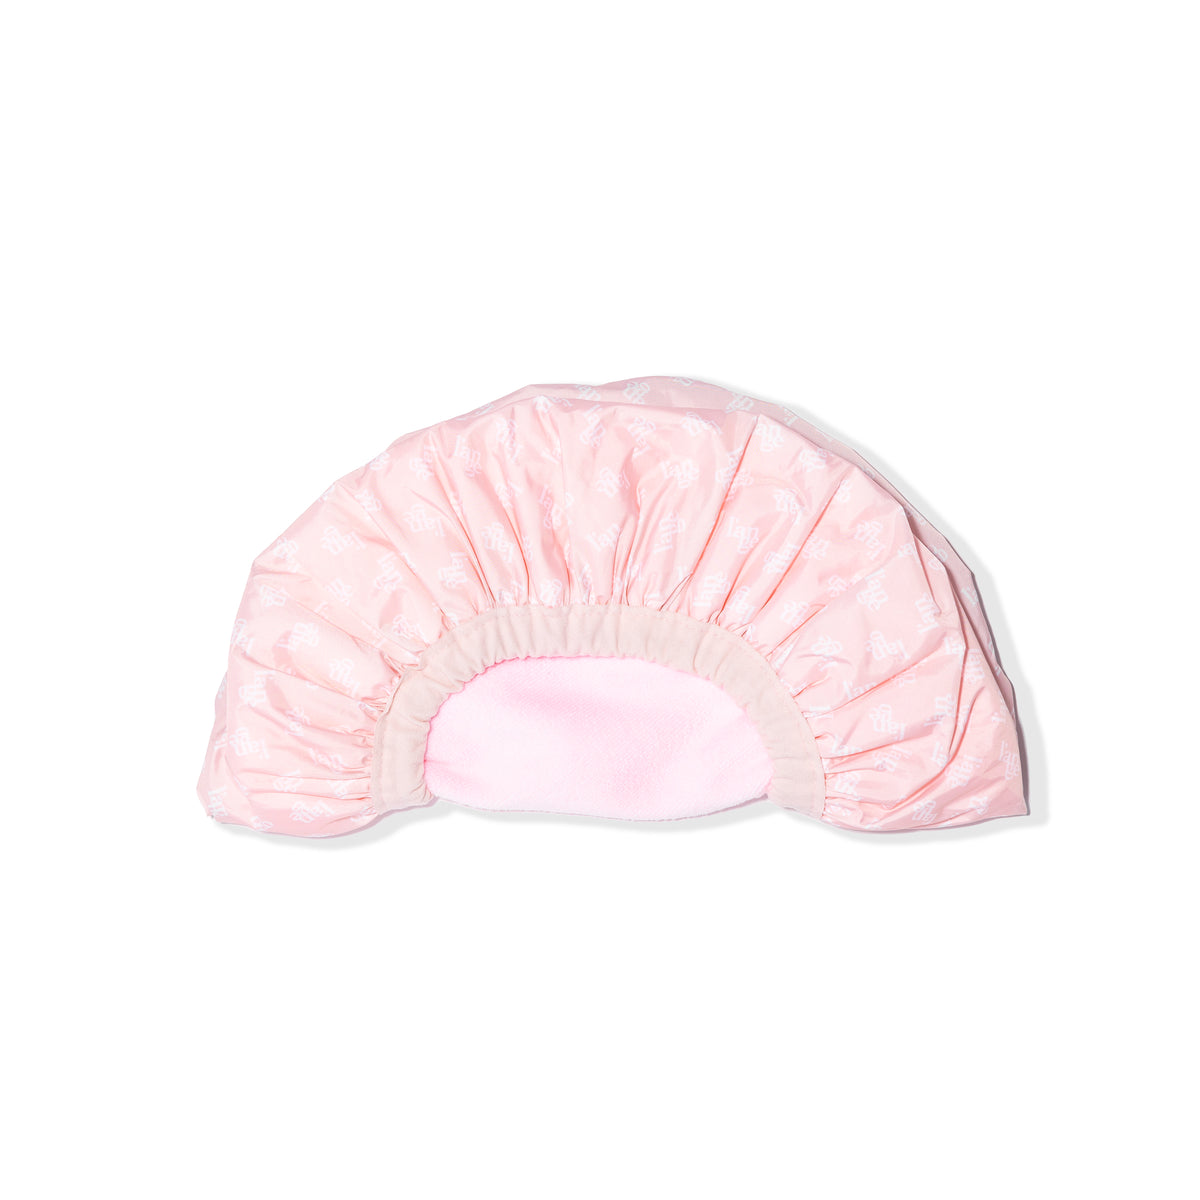 Réversible Double-Sided Shower Cap– L'ange Hair